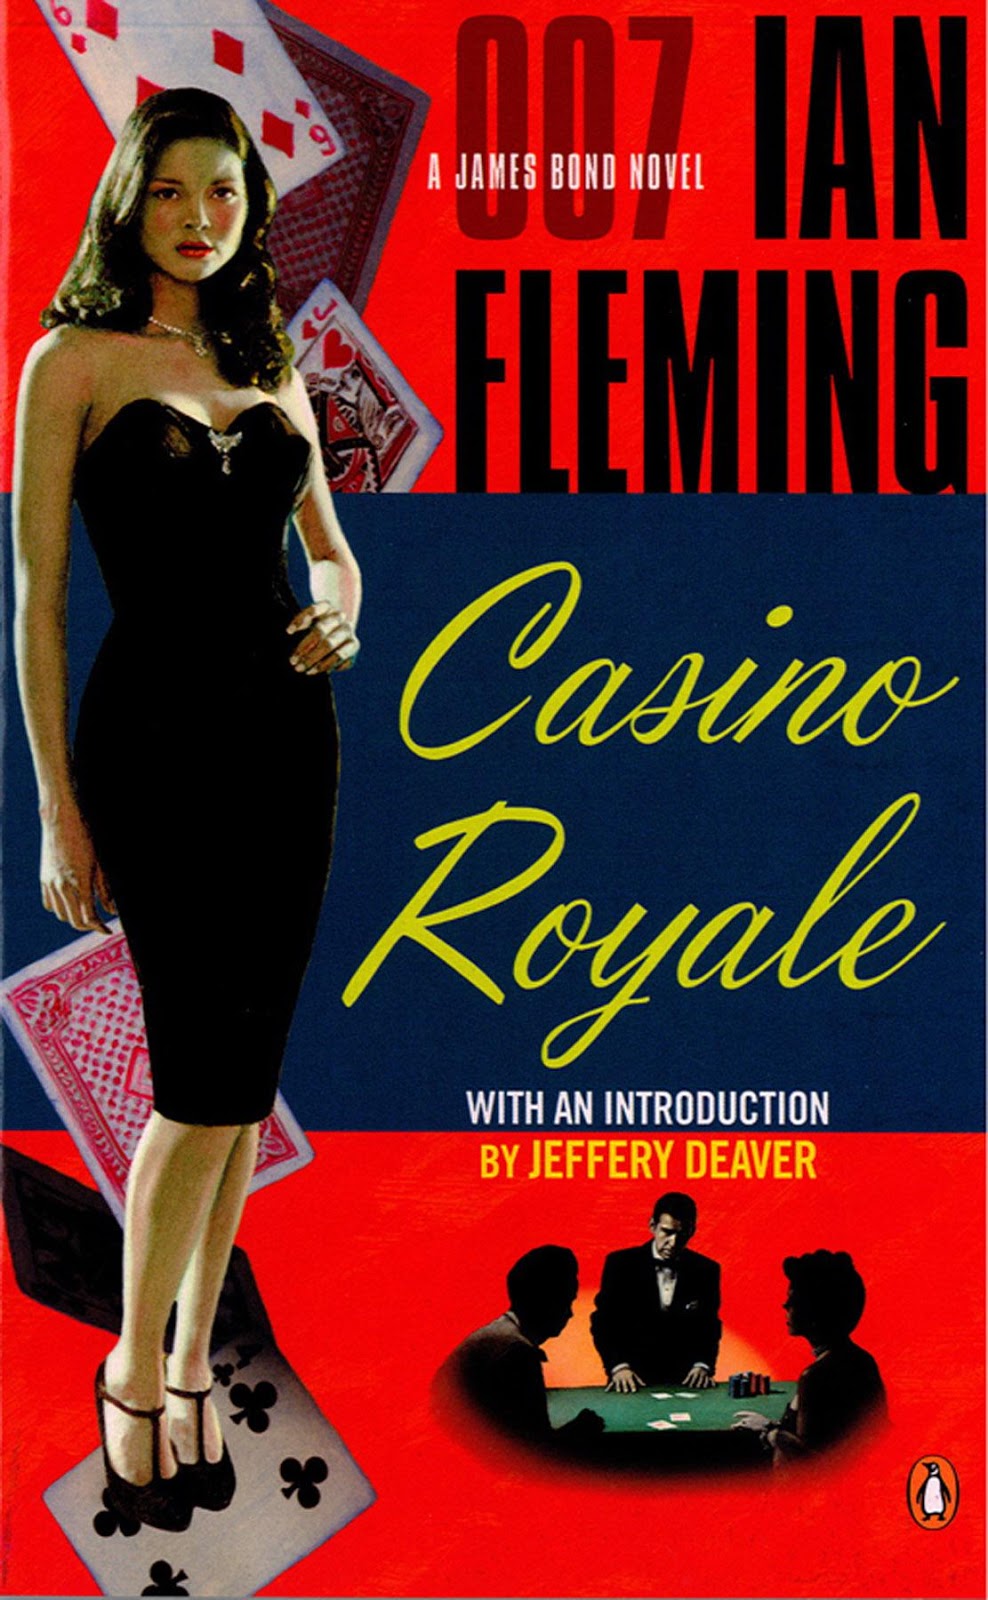 casino-royale-cover